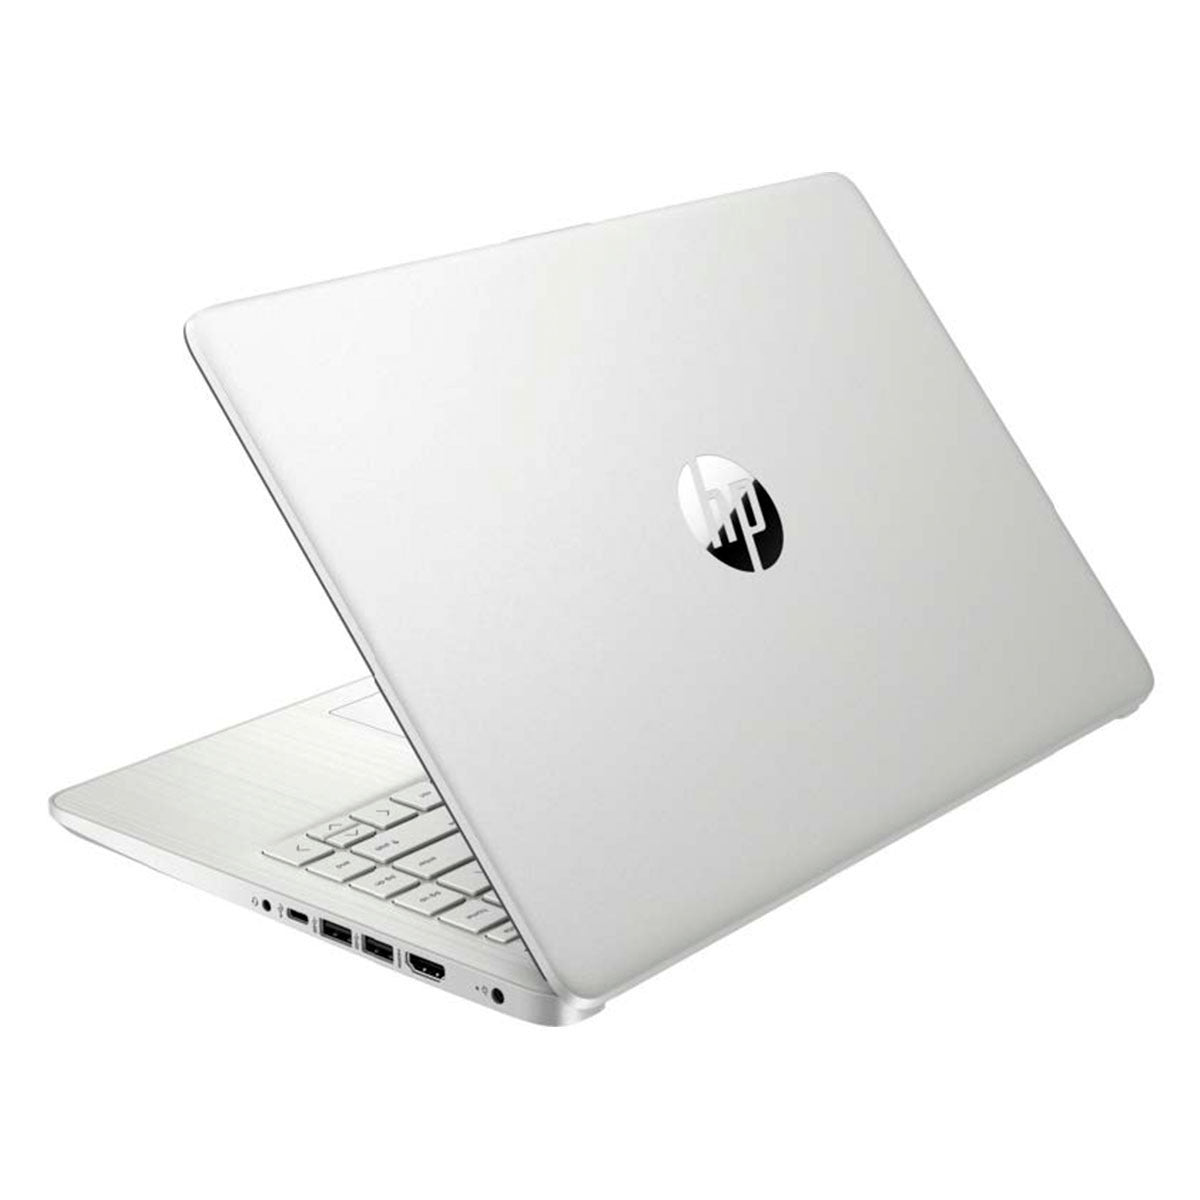 Laptop HP 14-DQ0519LA - 14" - Intel Celeron - 4GB RAM - 128GB SSD (80M31LA#ABM) yapcr.com Costa Rica